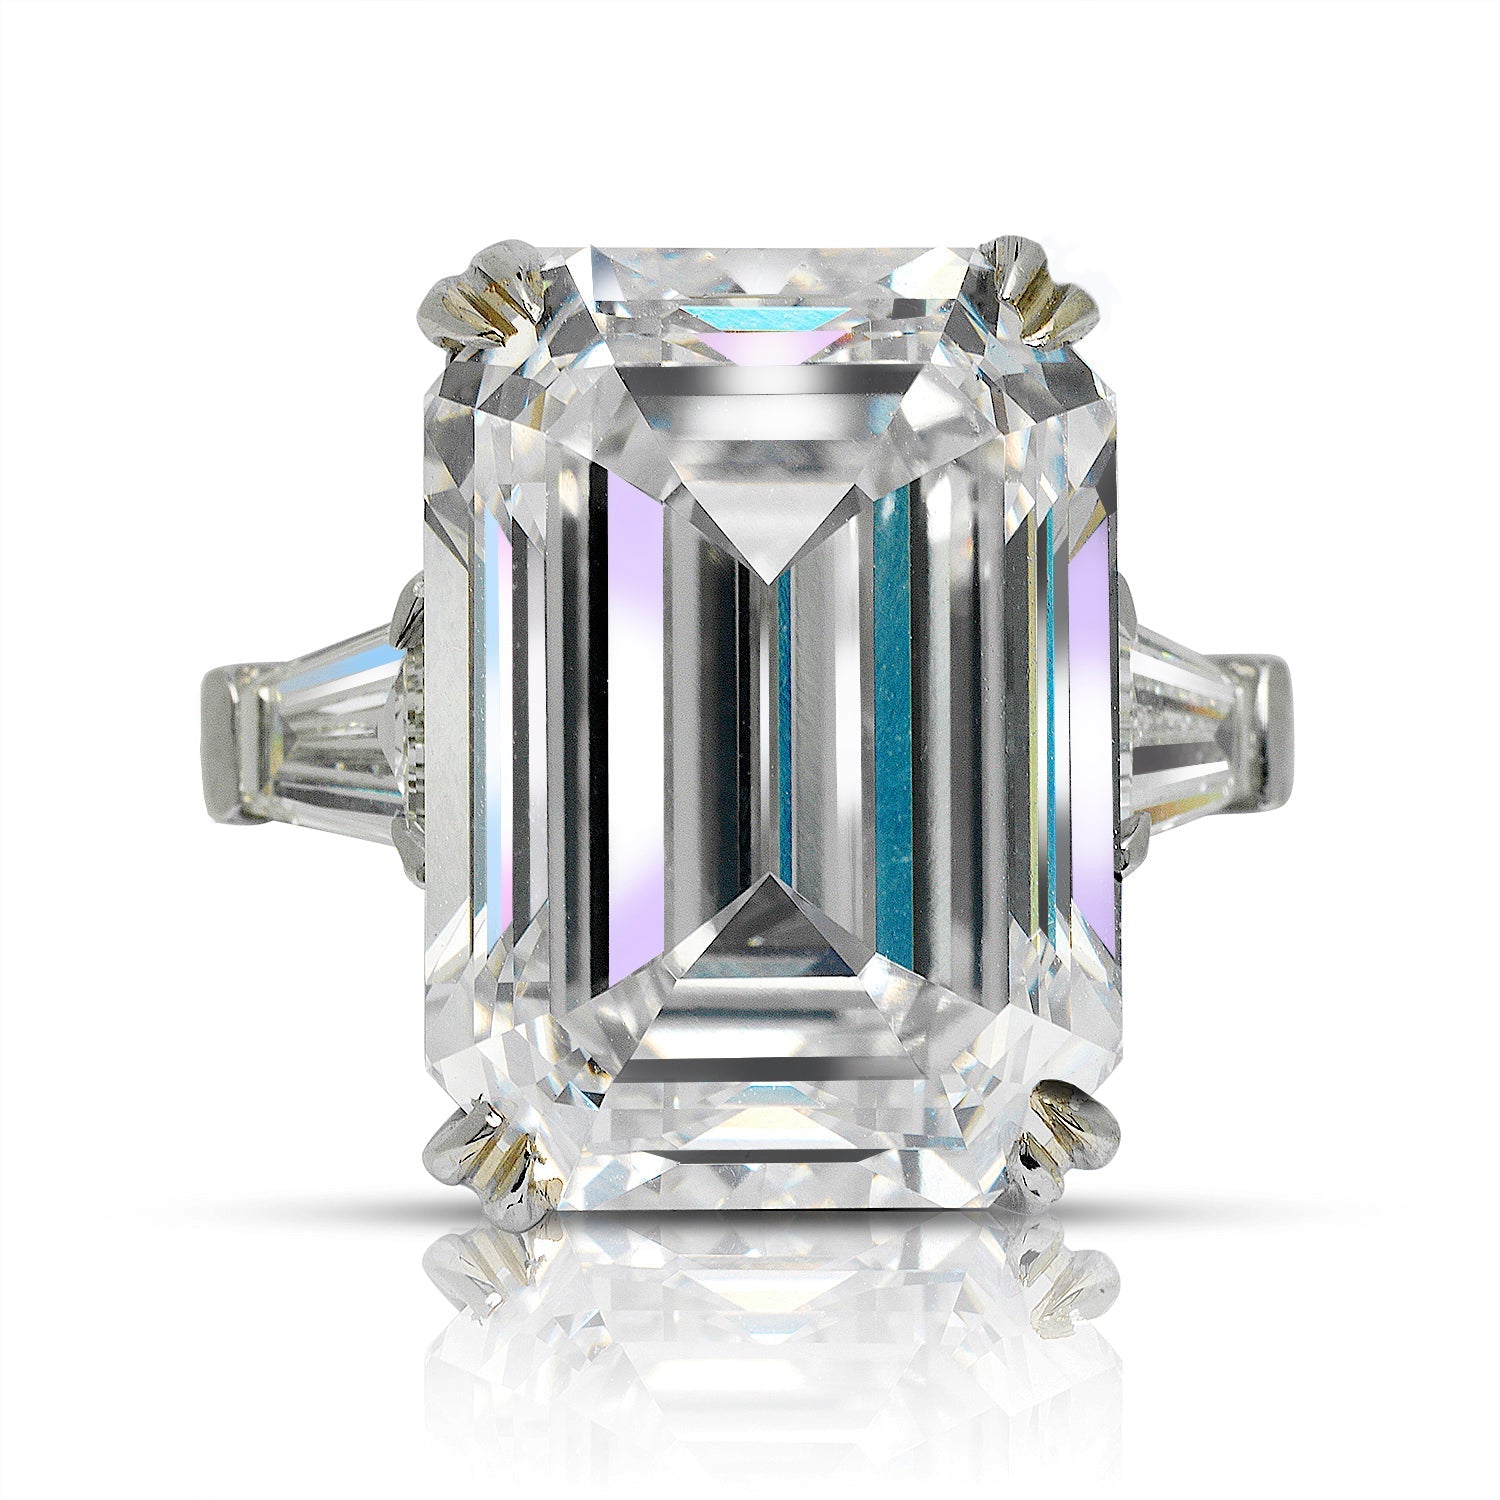 15 carat emerald cut diamond engagement ring